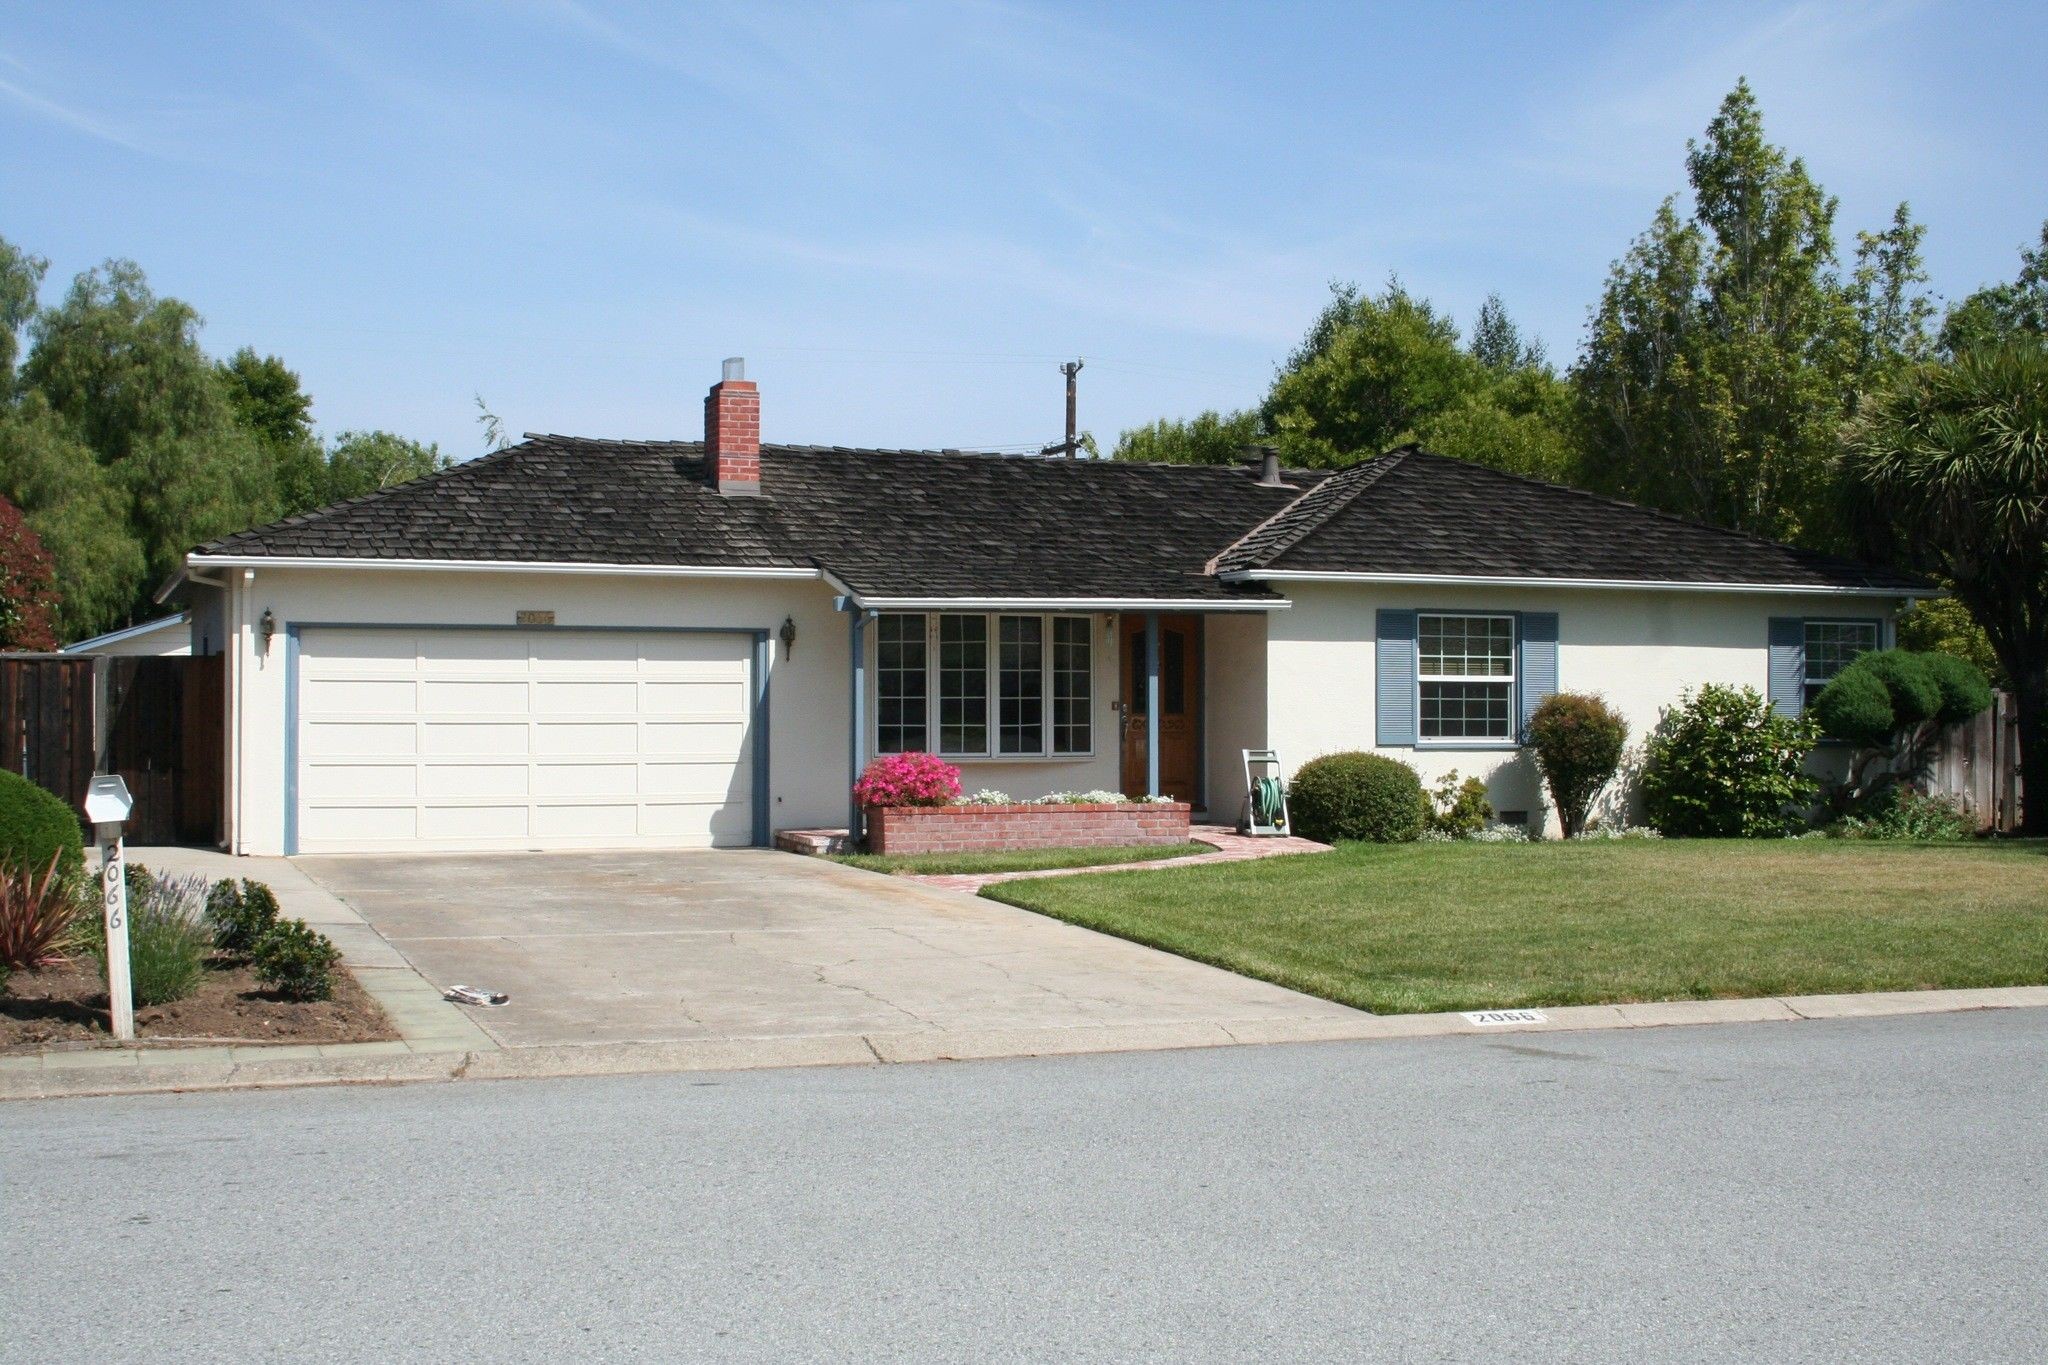 Kantor pertama Apple, garasi rumah Steve Jobs di kawasan The Los Altos, California, Amerika Serikat.